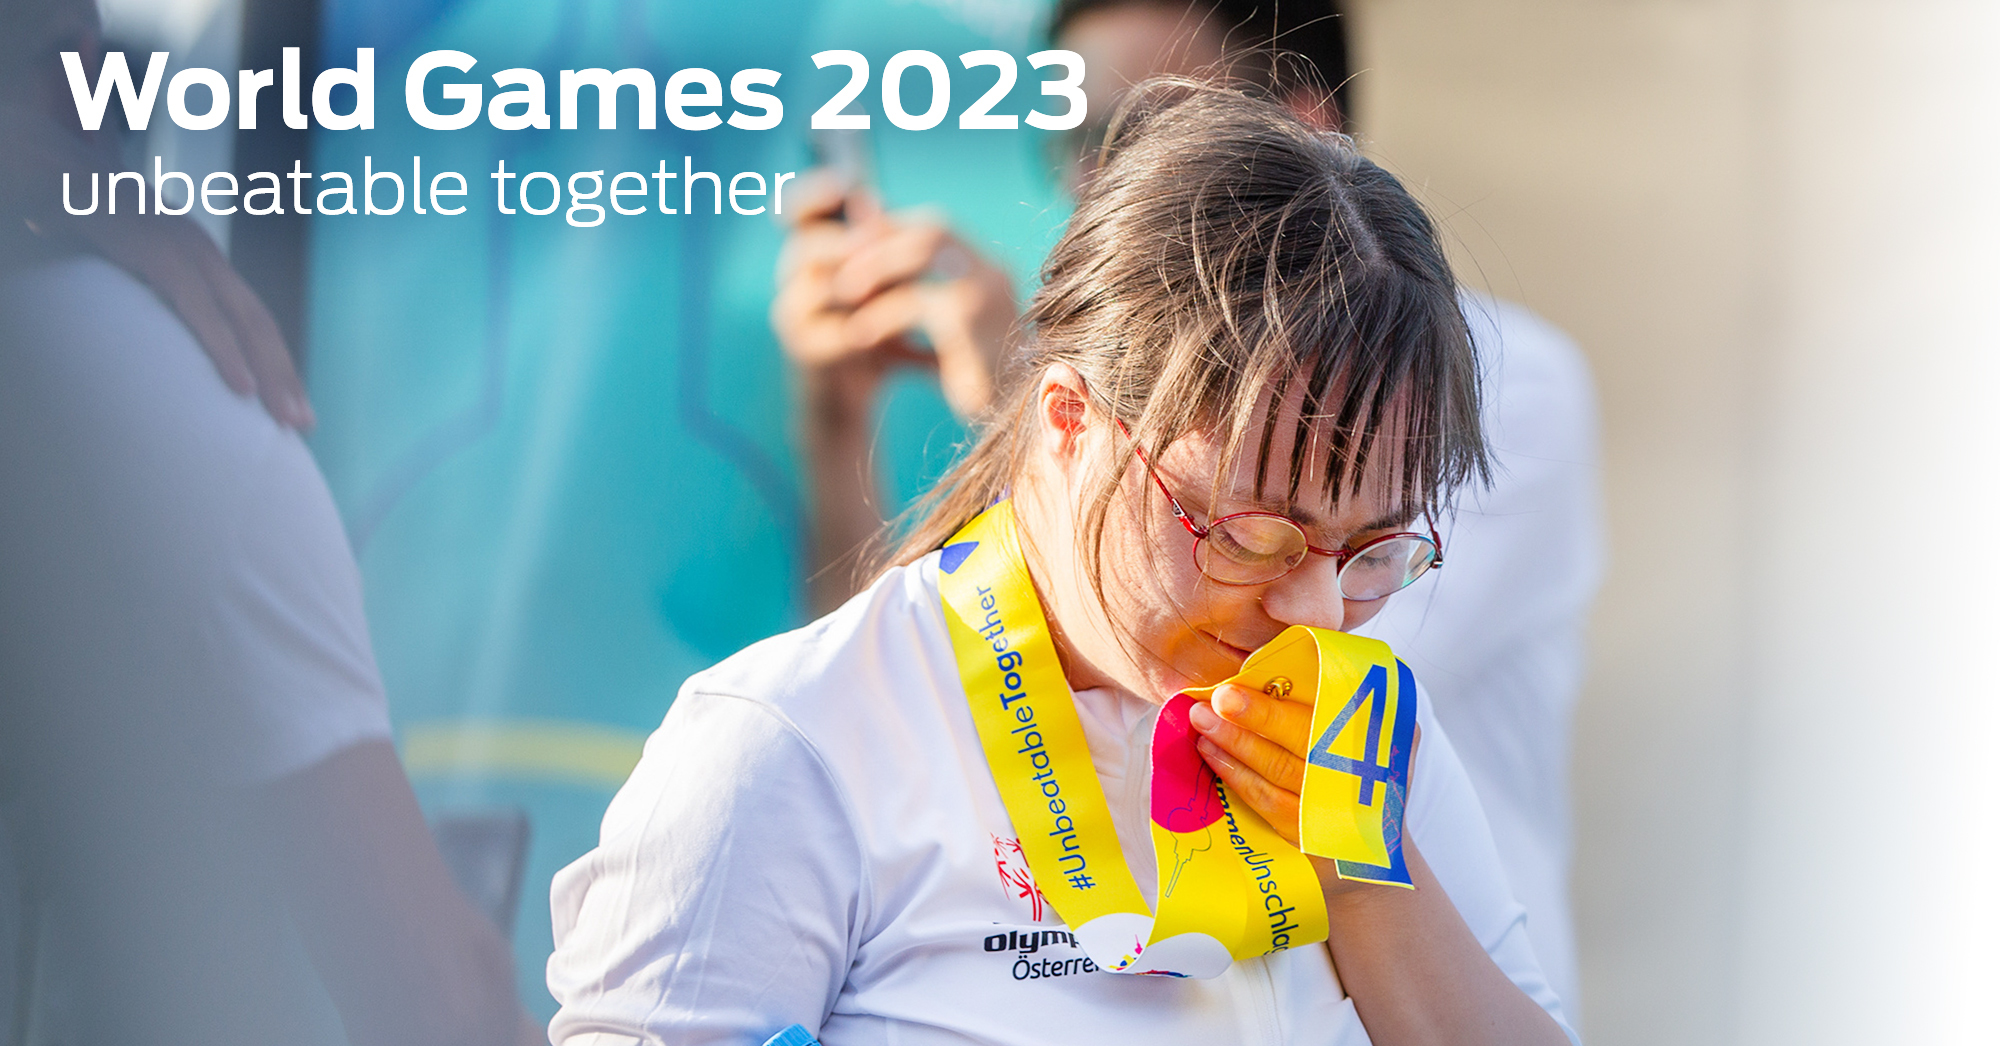 Special Olympics Berlin - World Games 2023: Veni, vidi, vici for Austria